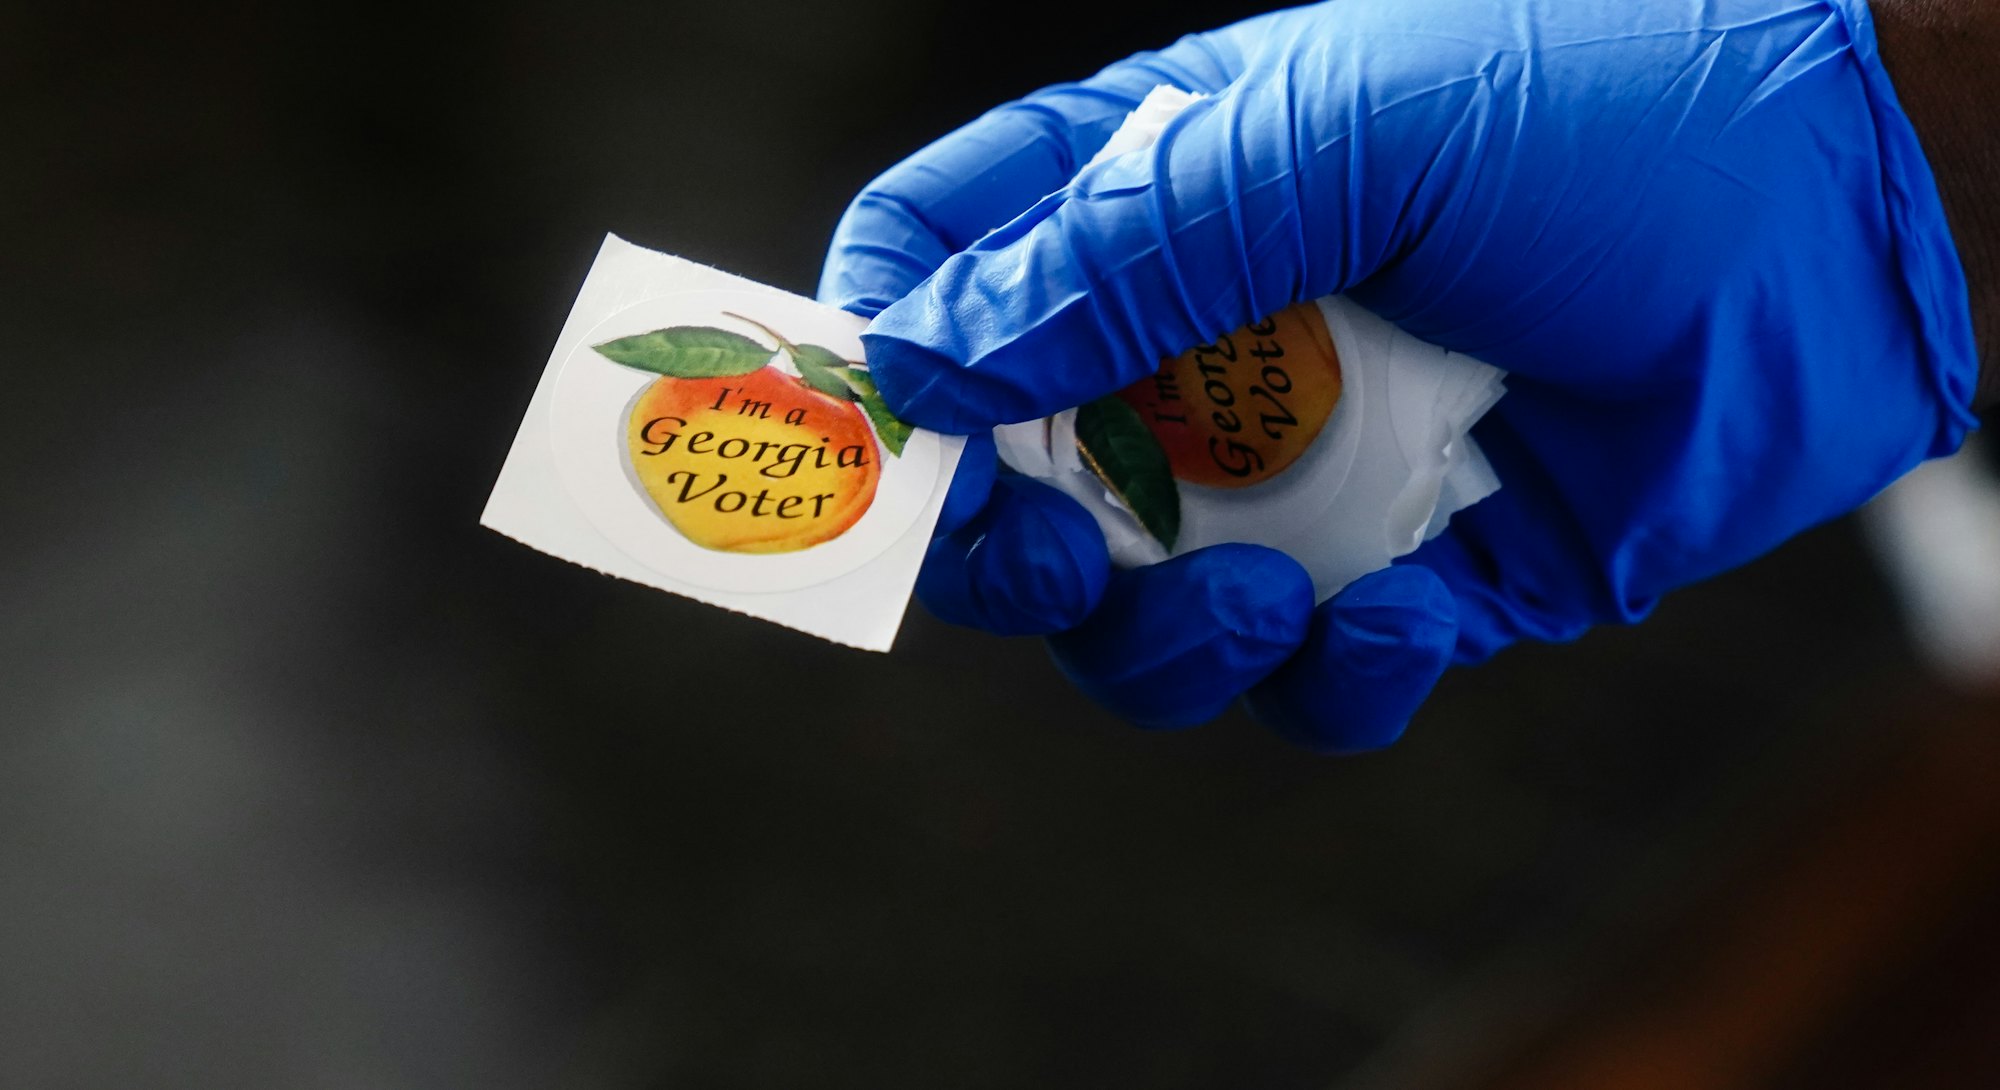 A Georgia voting sticker